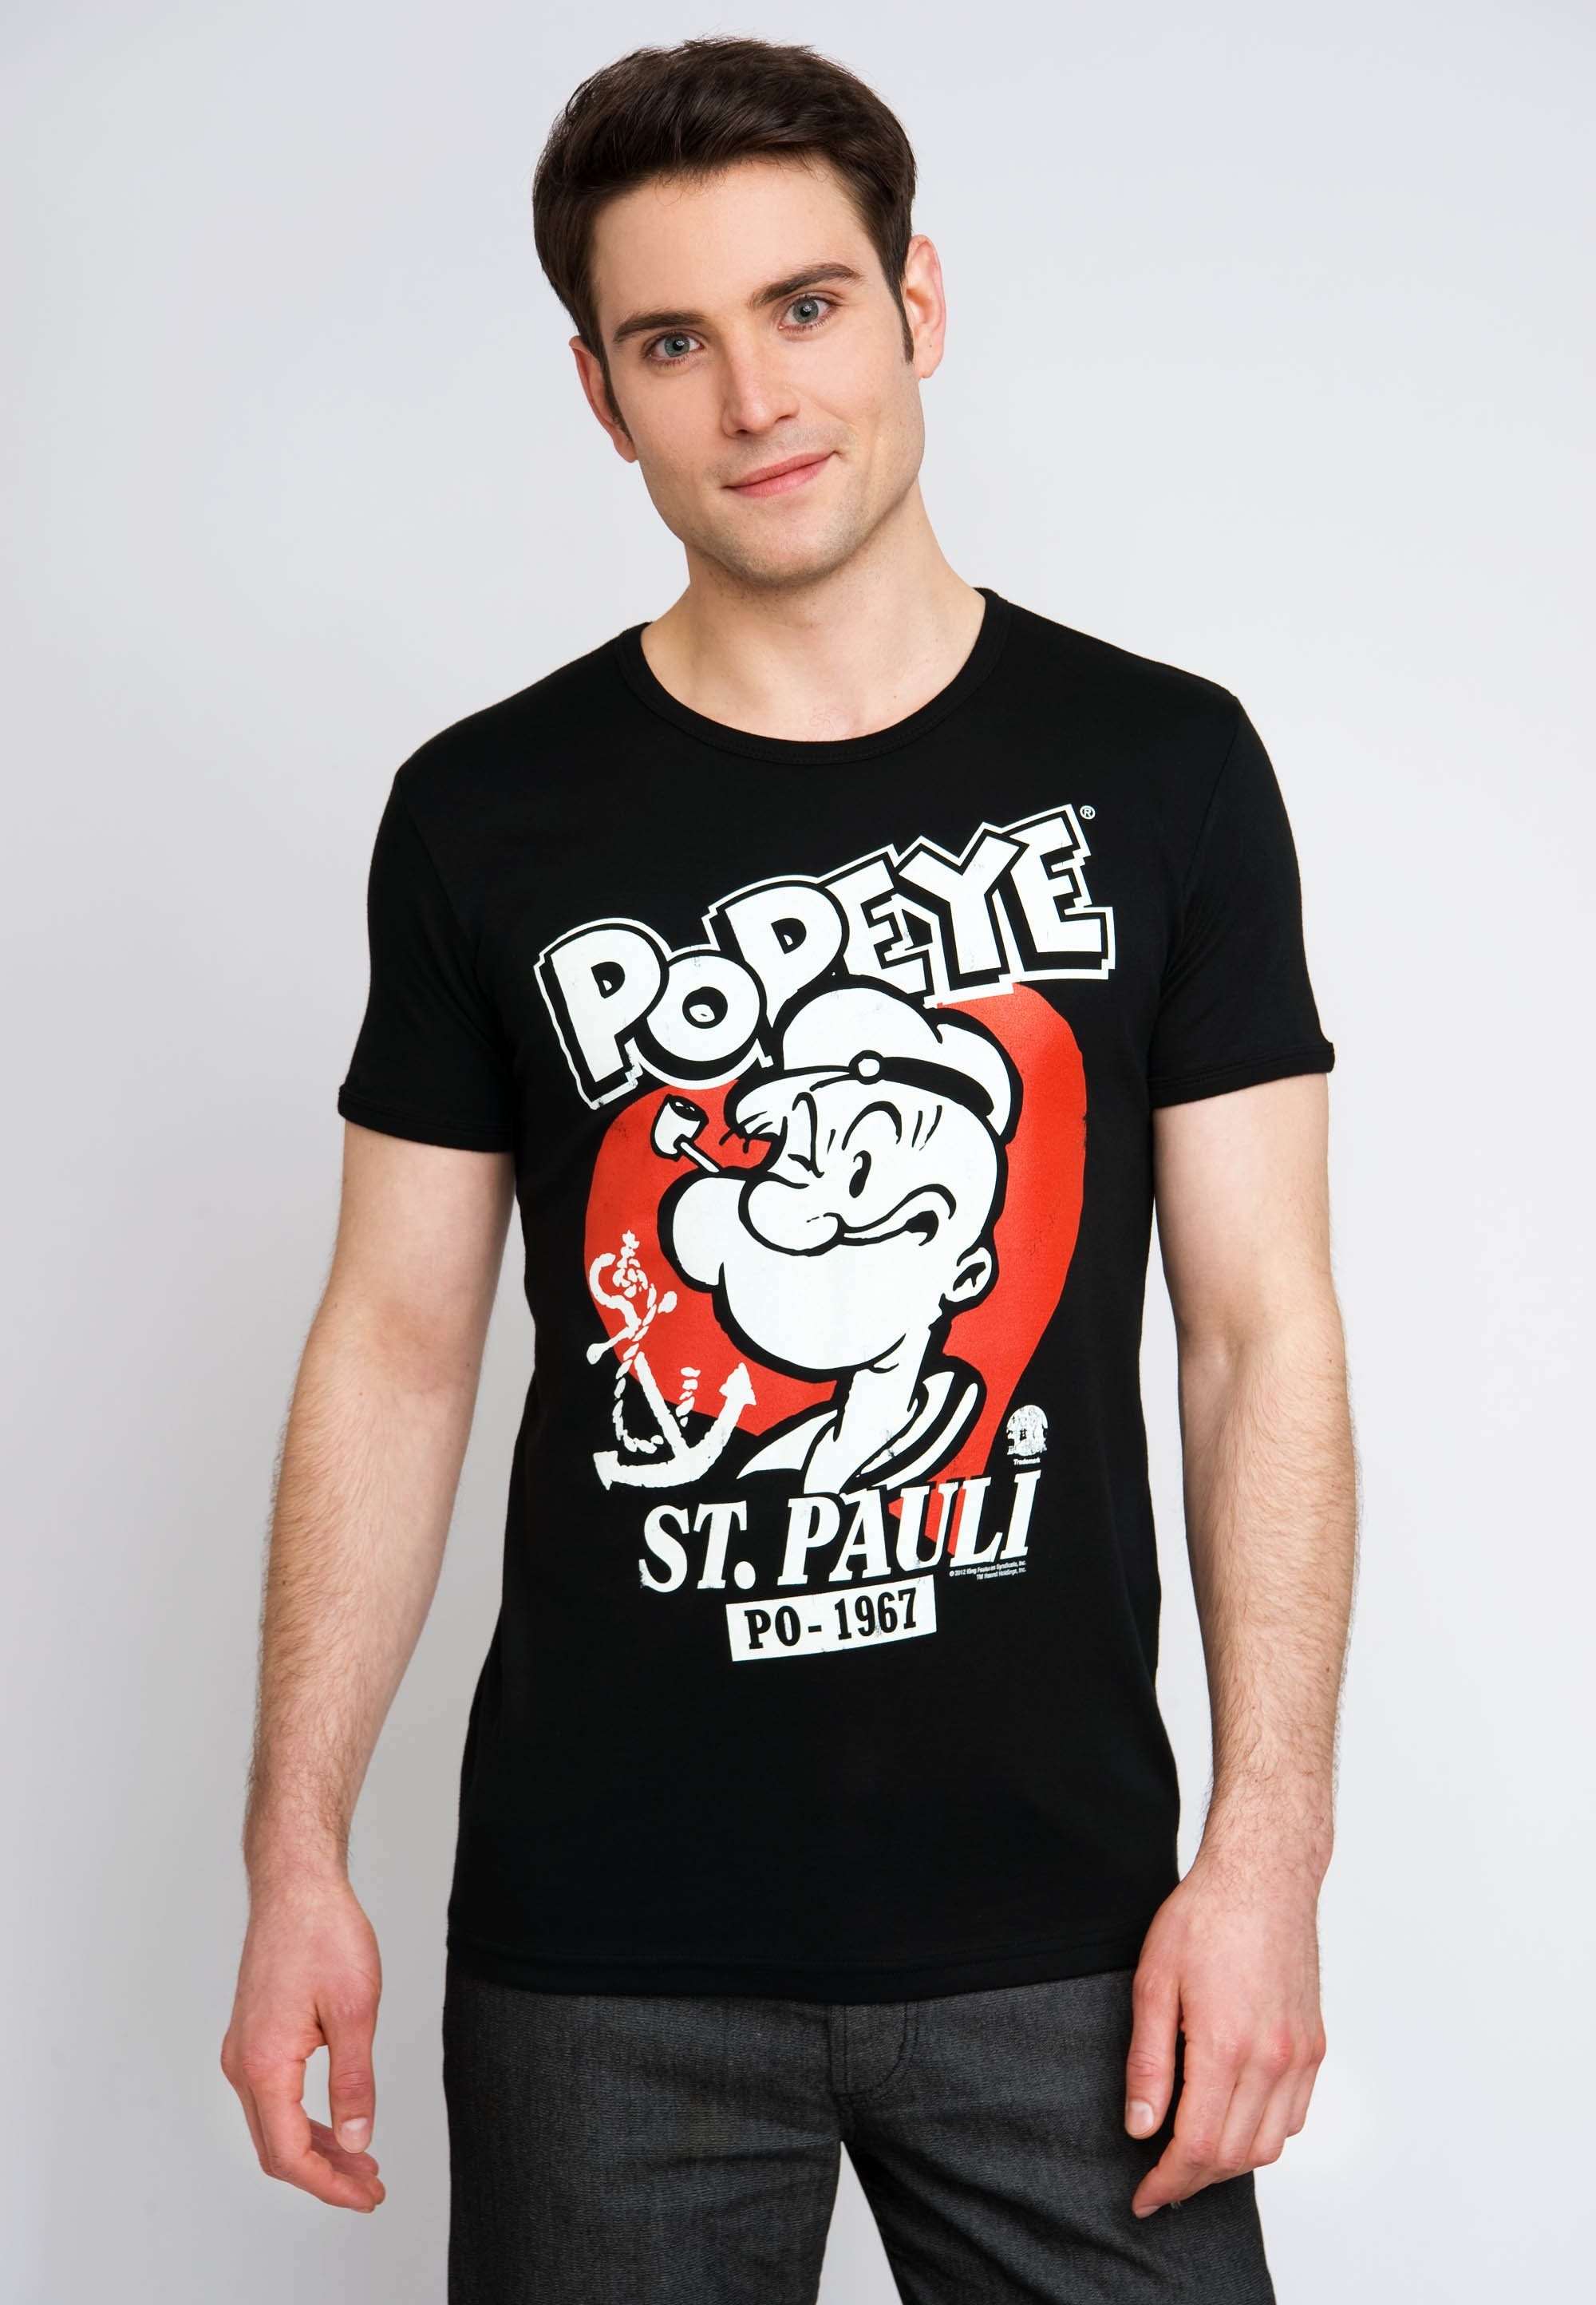 Popeye tollem 1967 PO - Popeye-Frontprint - T-Shirt Pauli mit St. LOGOSHIRT